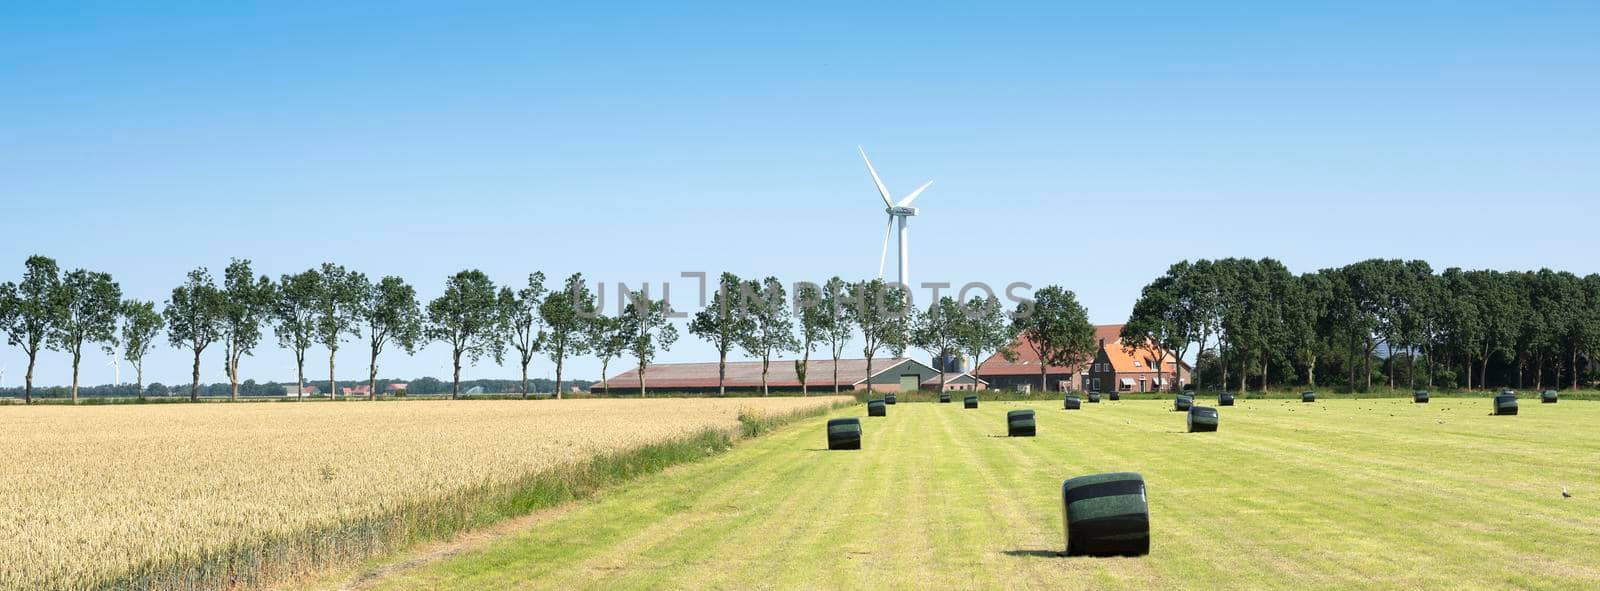 farm and fields with wind turbine in wieringermeer under blue sky in the netherlands noord holland by ahavelaar